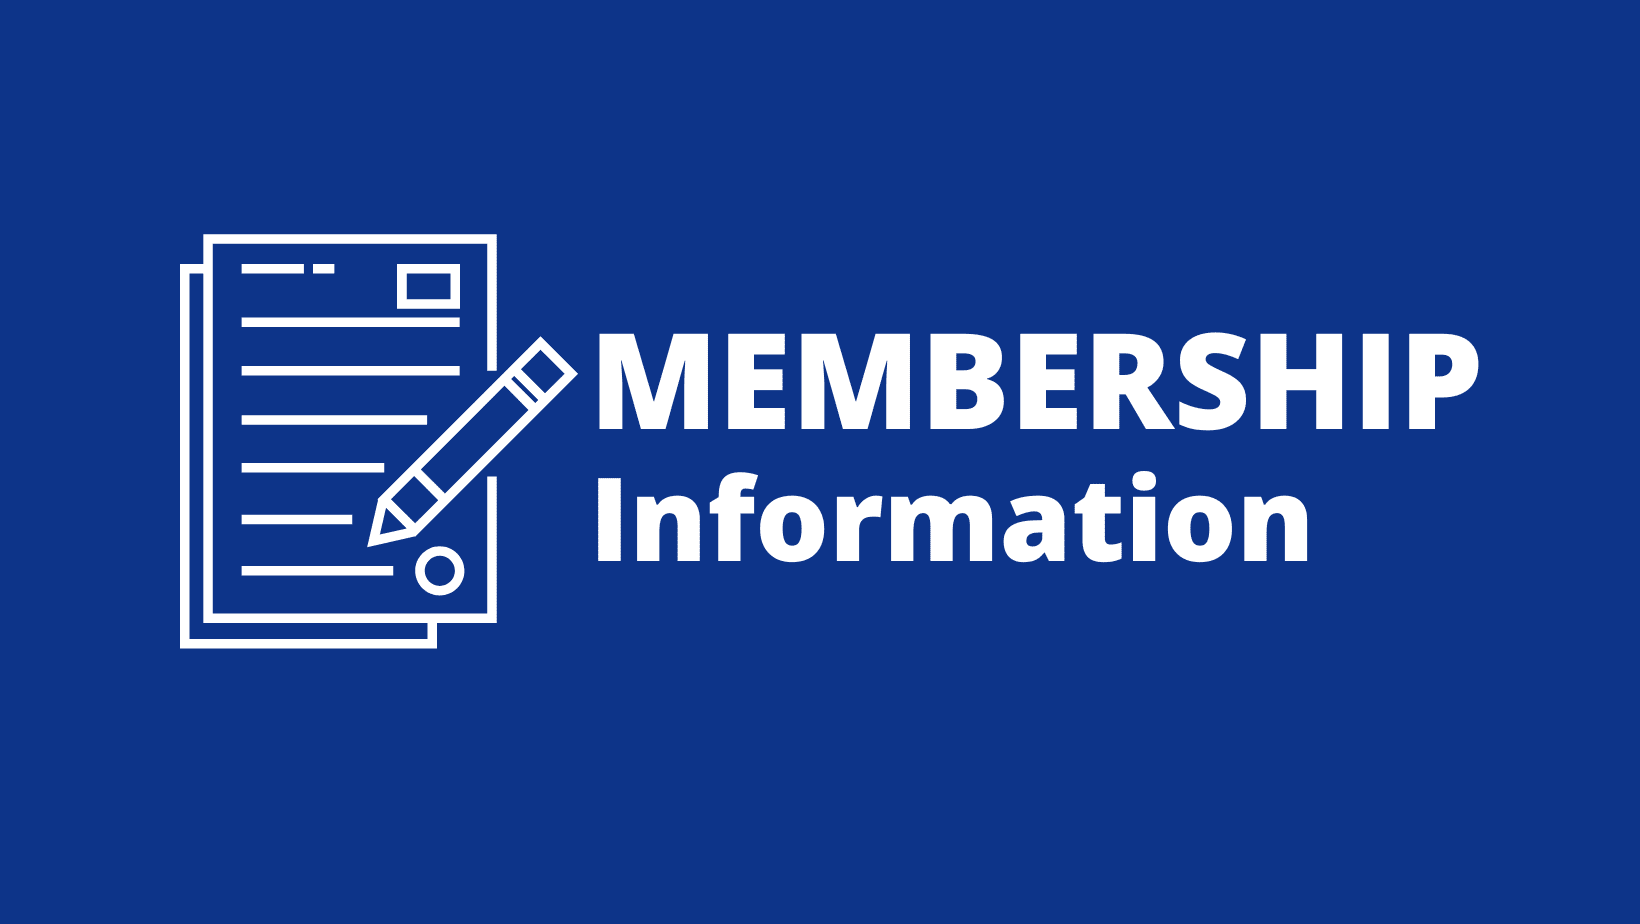 ESPA Membership Information